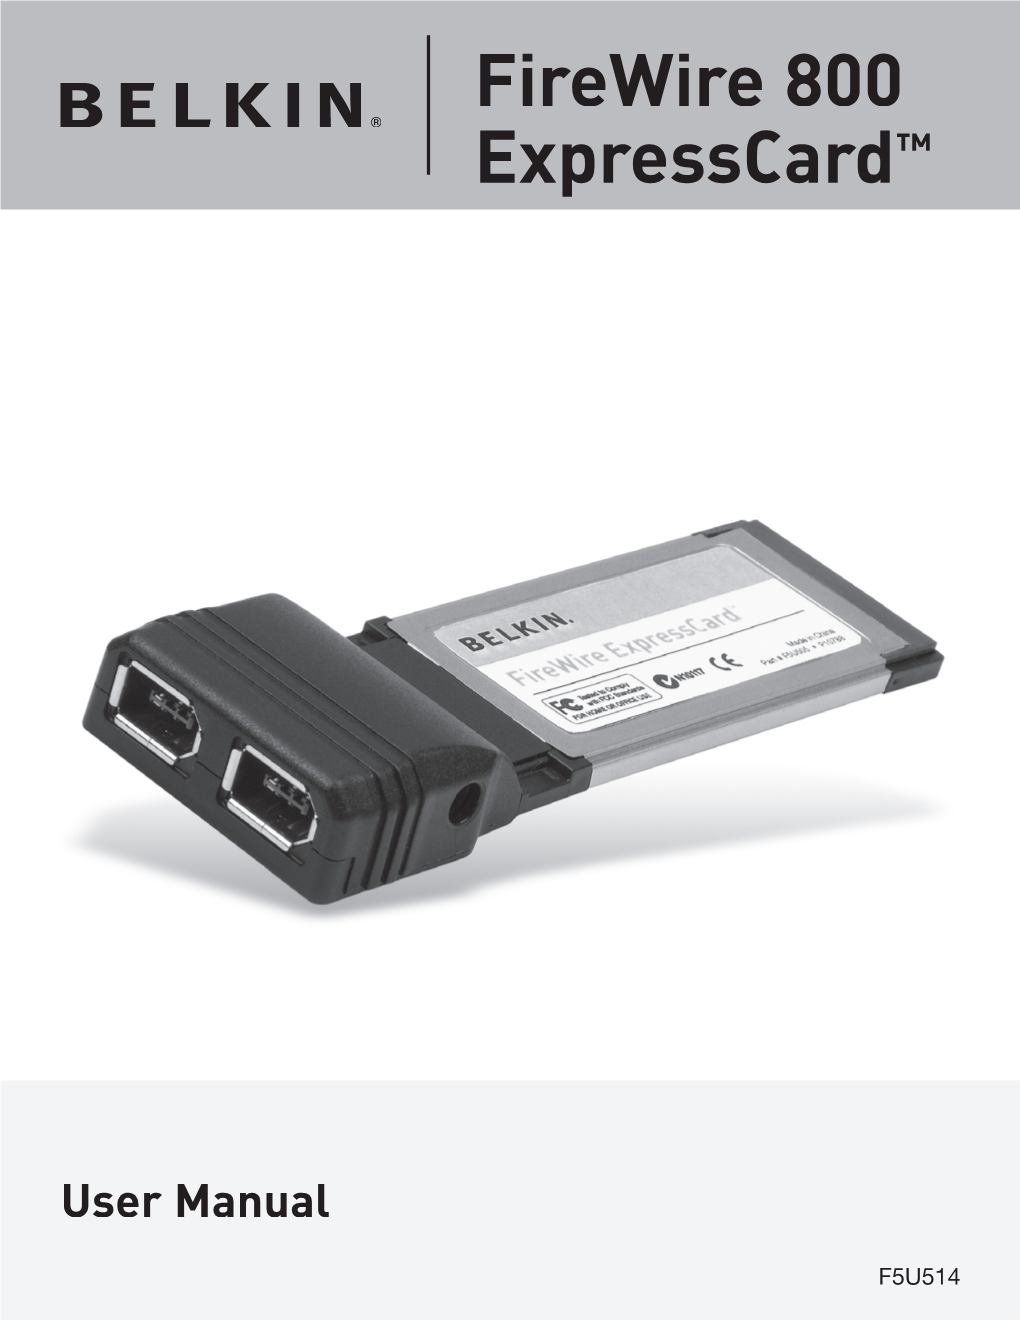 Firewire 800 Expresscard™